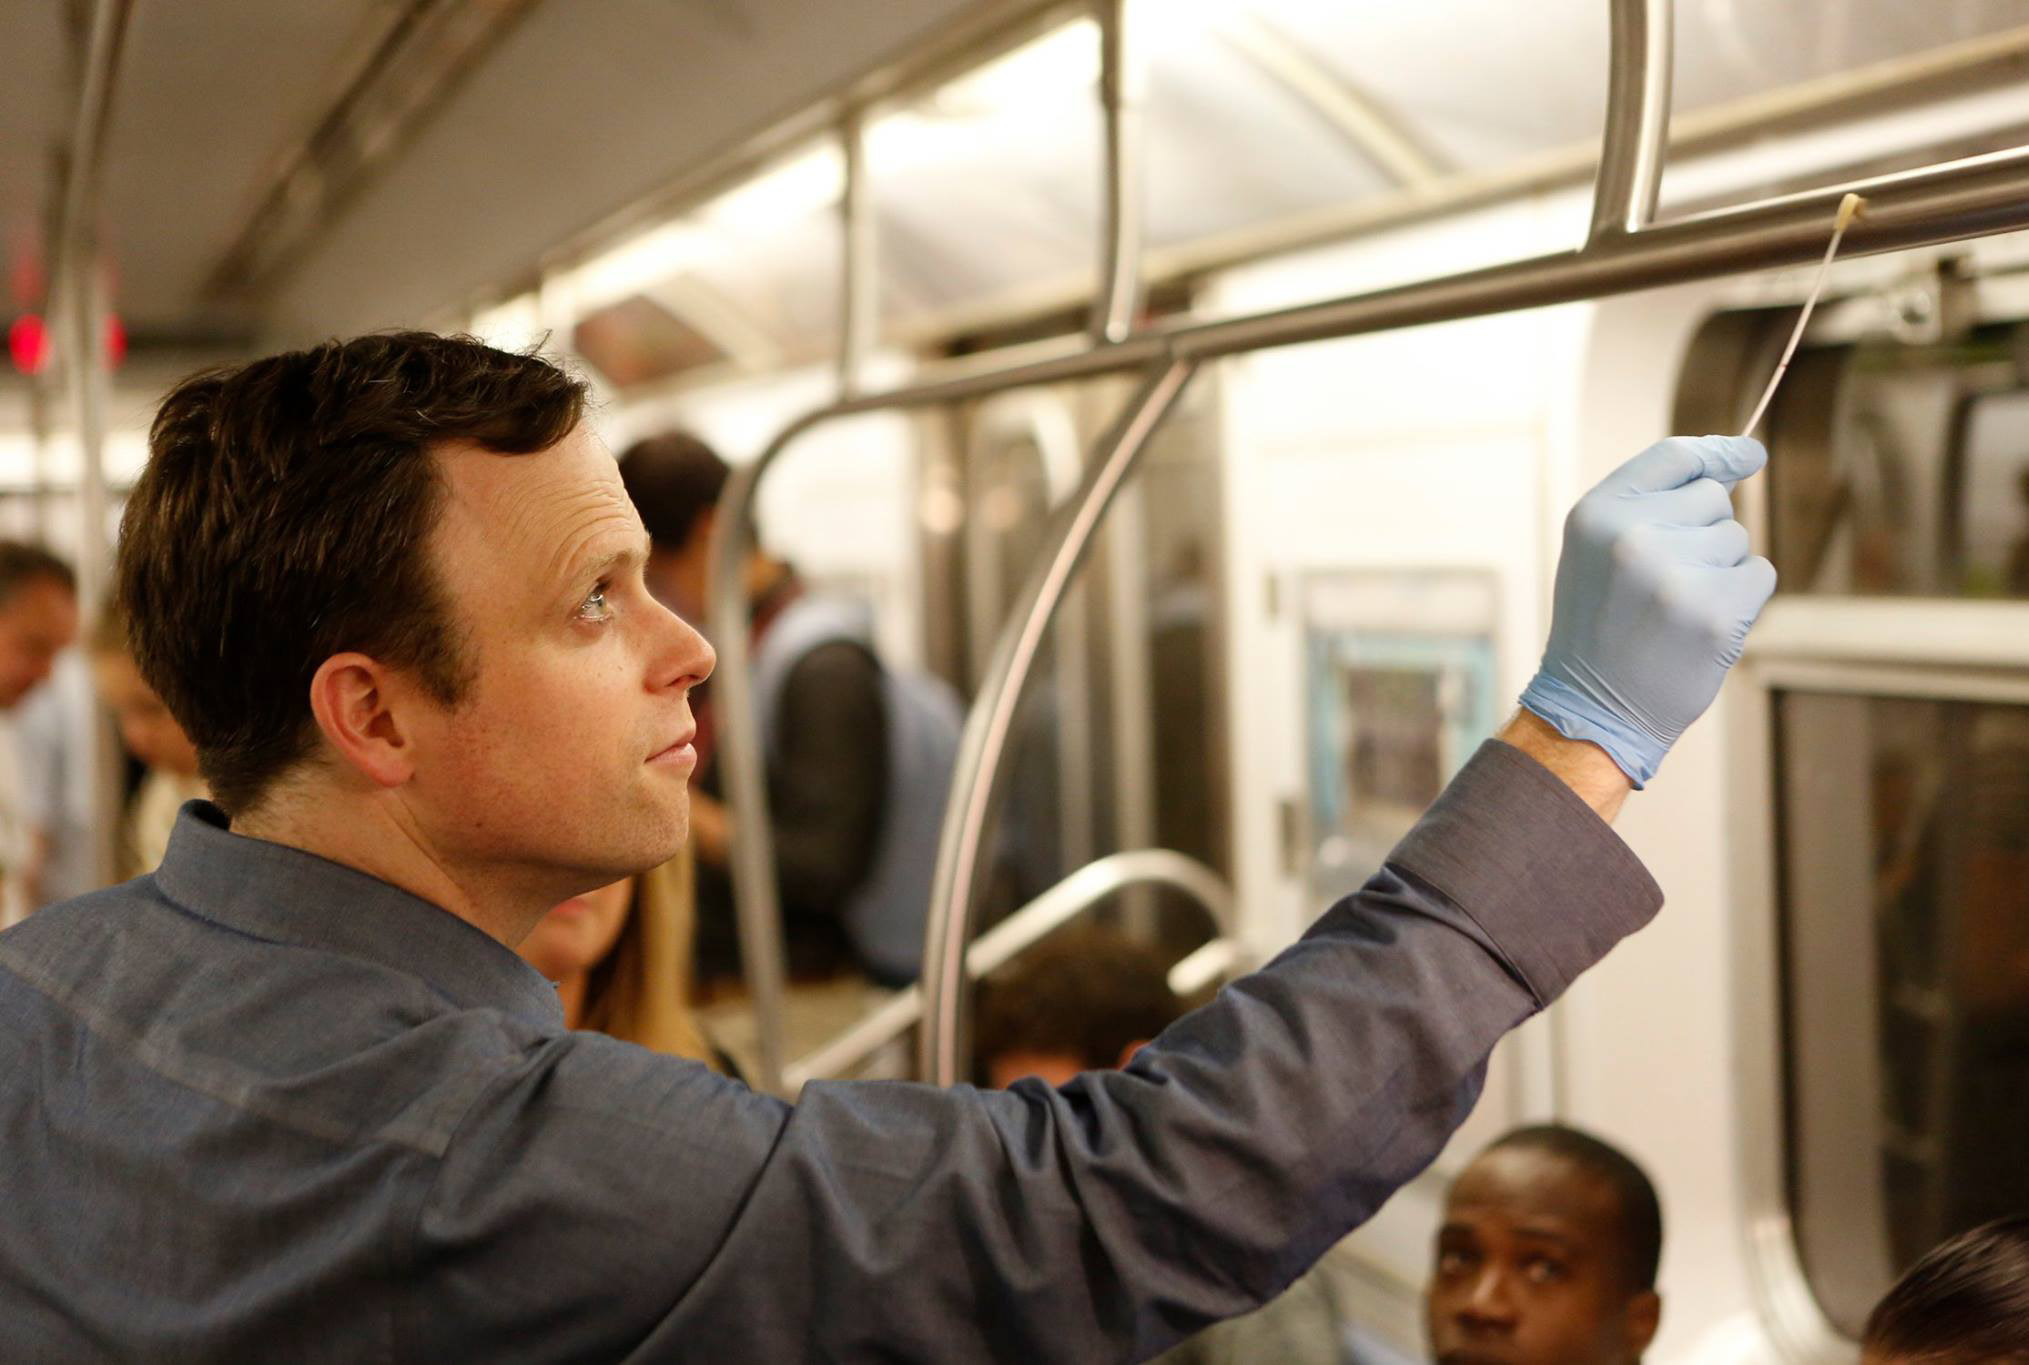 Chris Mason samples a New York City subway car for DNA, RNA and microbes on Global City Sampling Day